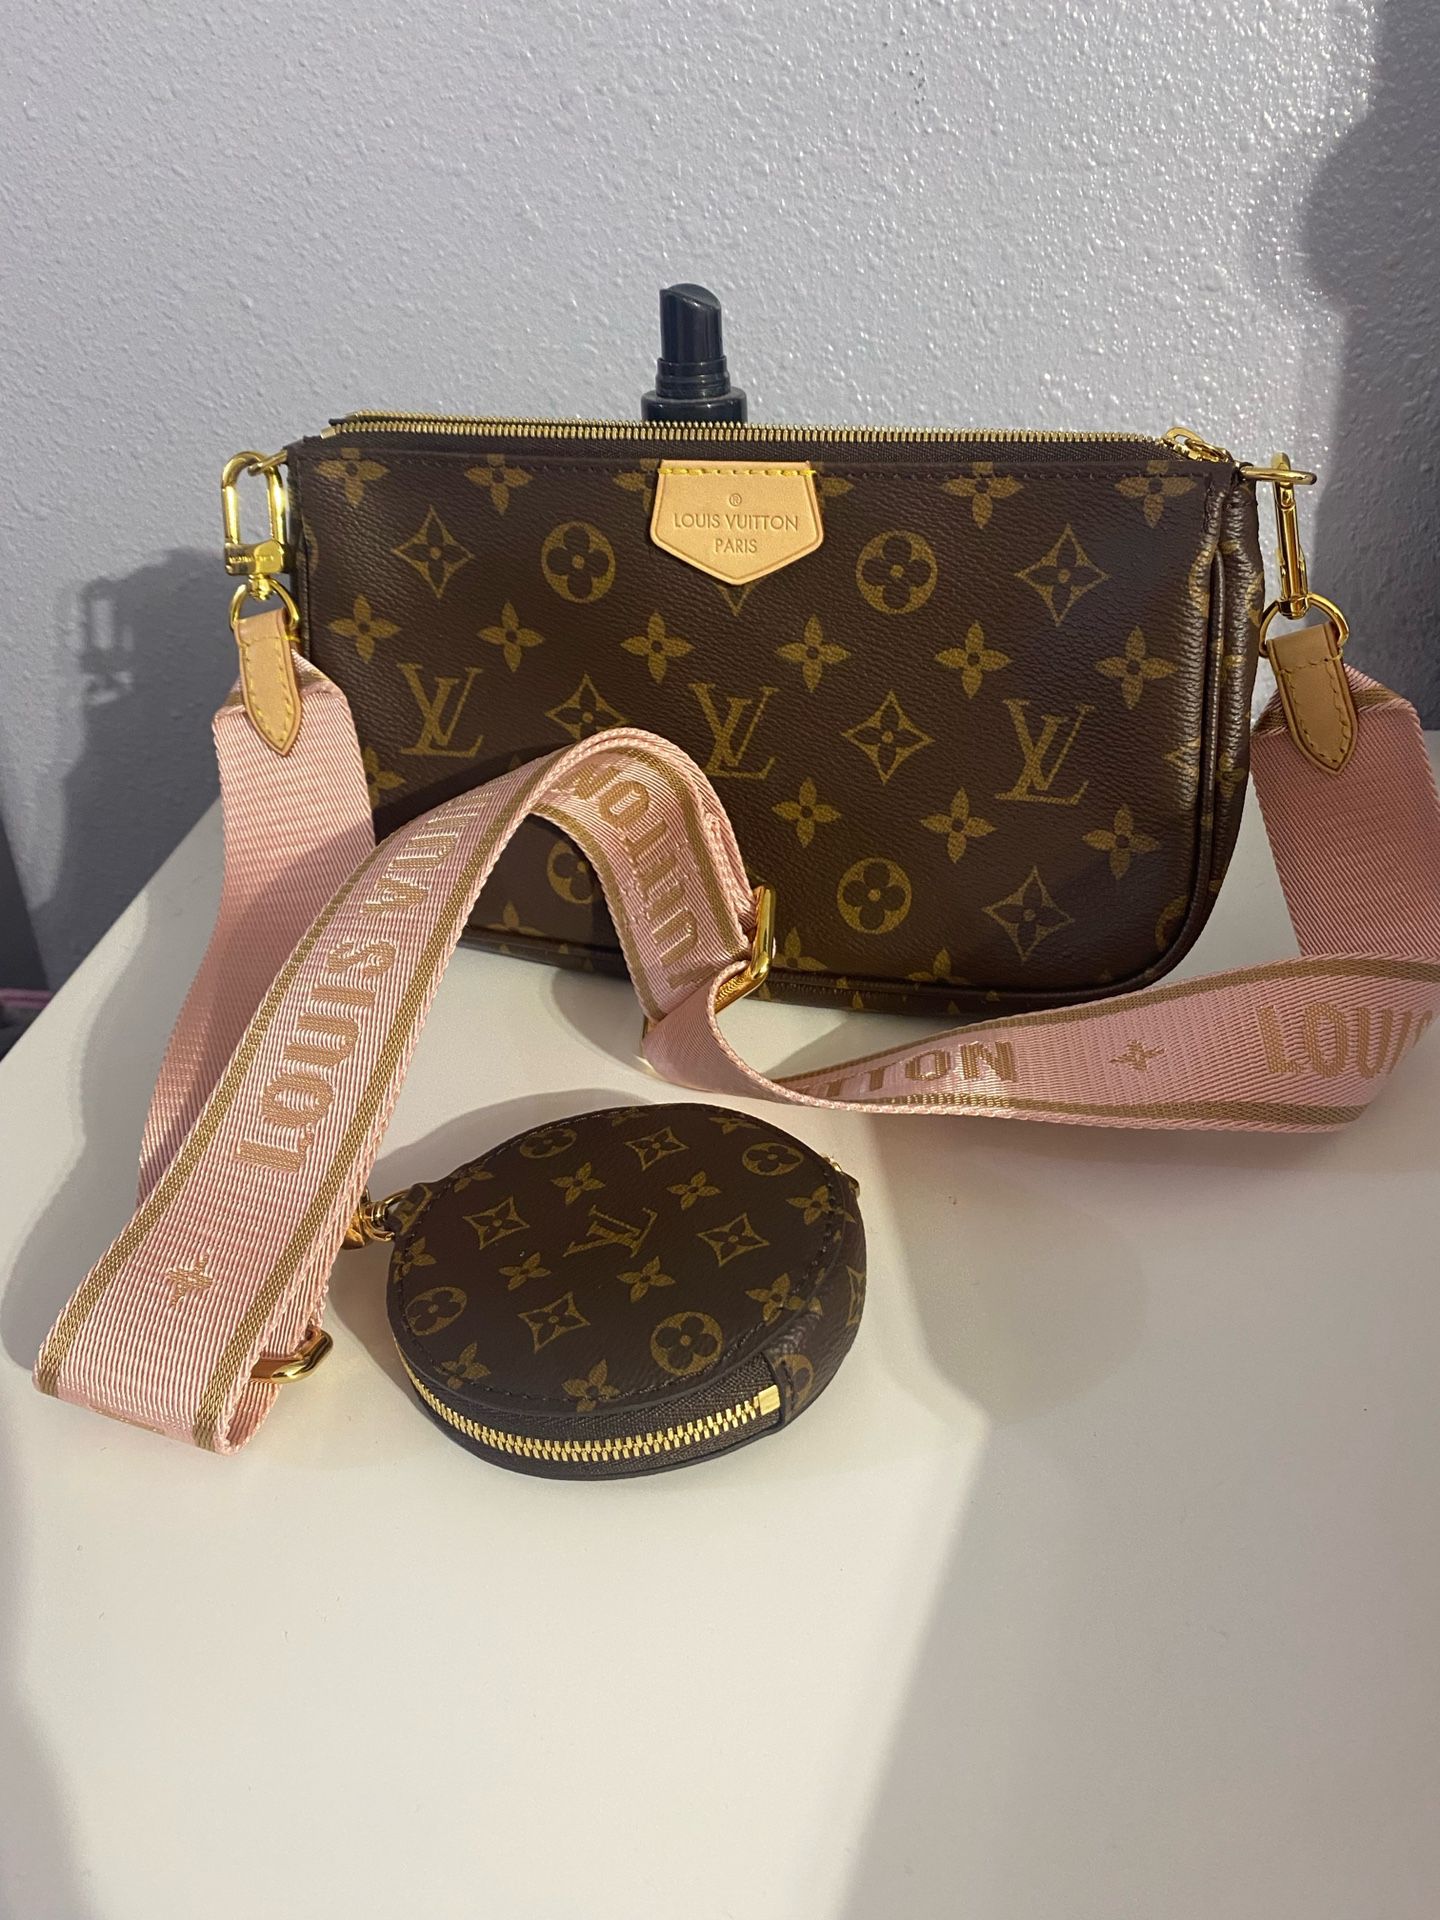 Louis Vuitton Multi Pochette Accessoires Bags 2 2 for Sale in Sugar Land,  TX - OfferUp